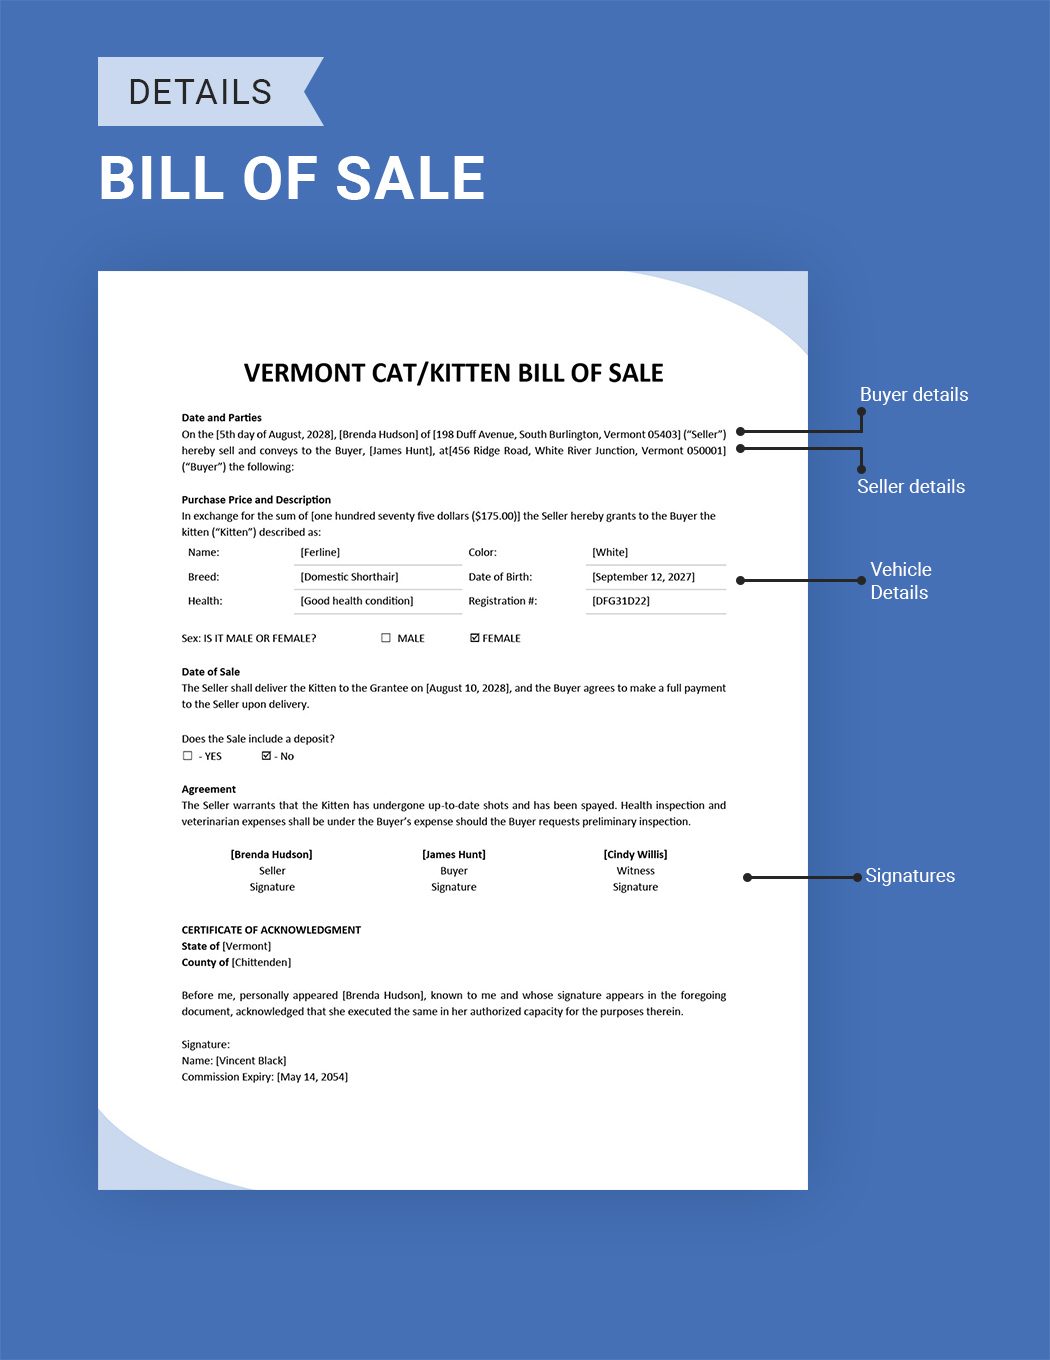 Vermont Cat/Kitten Bill of Sale Template